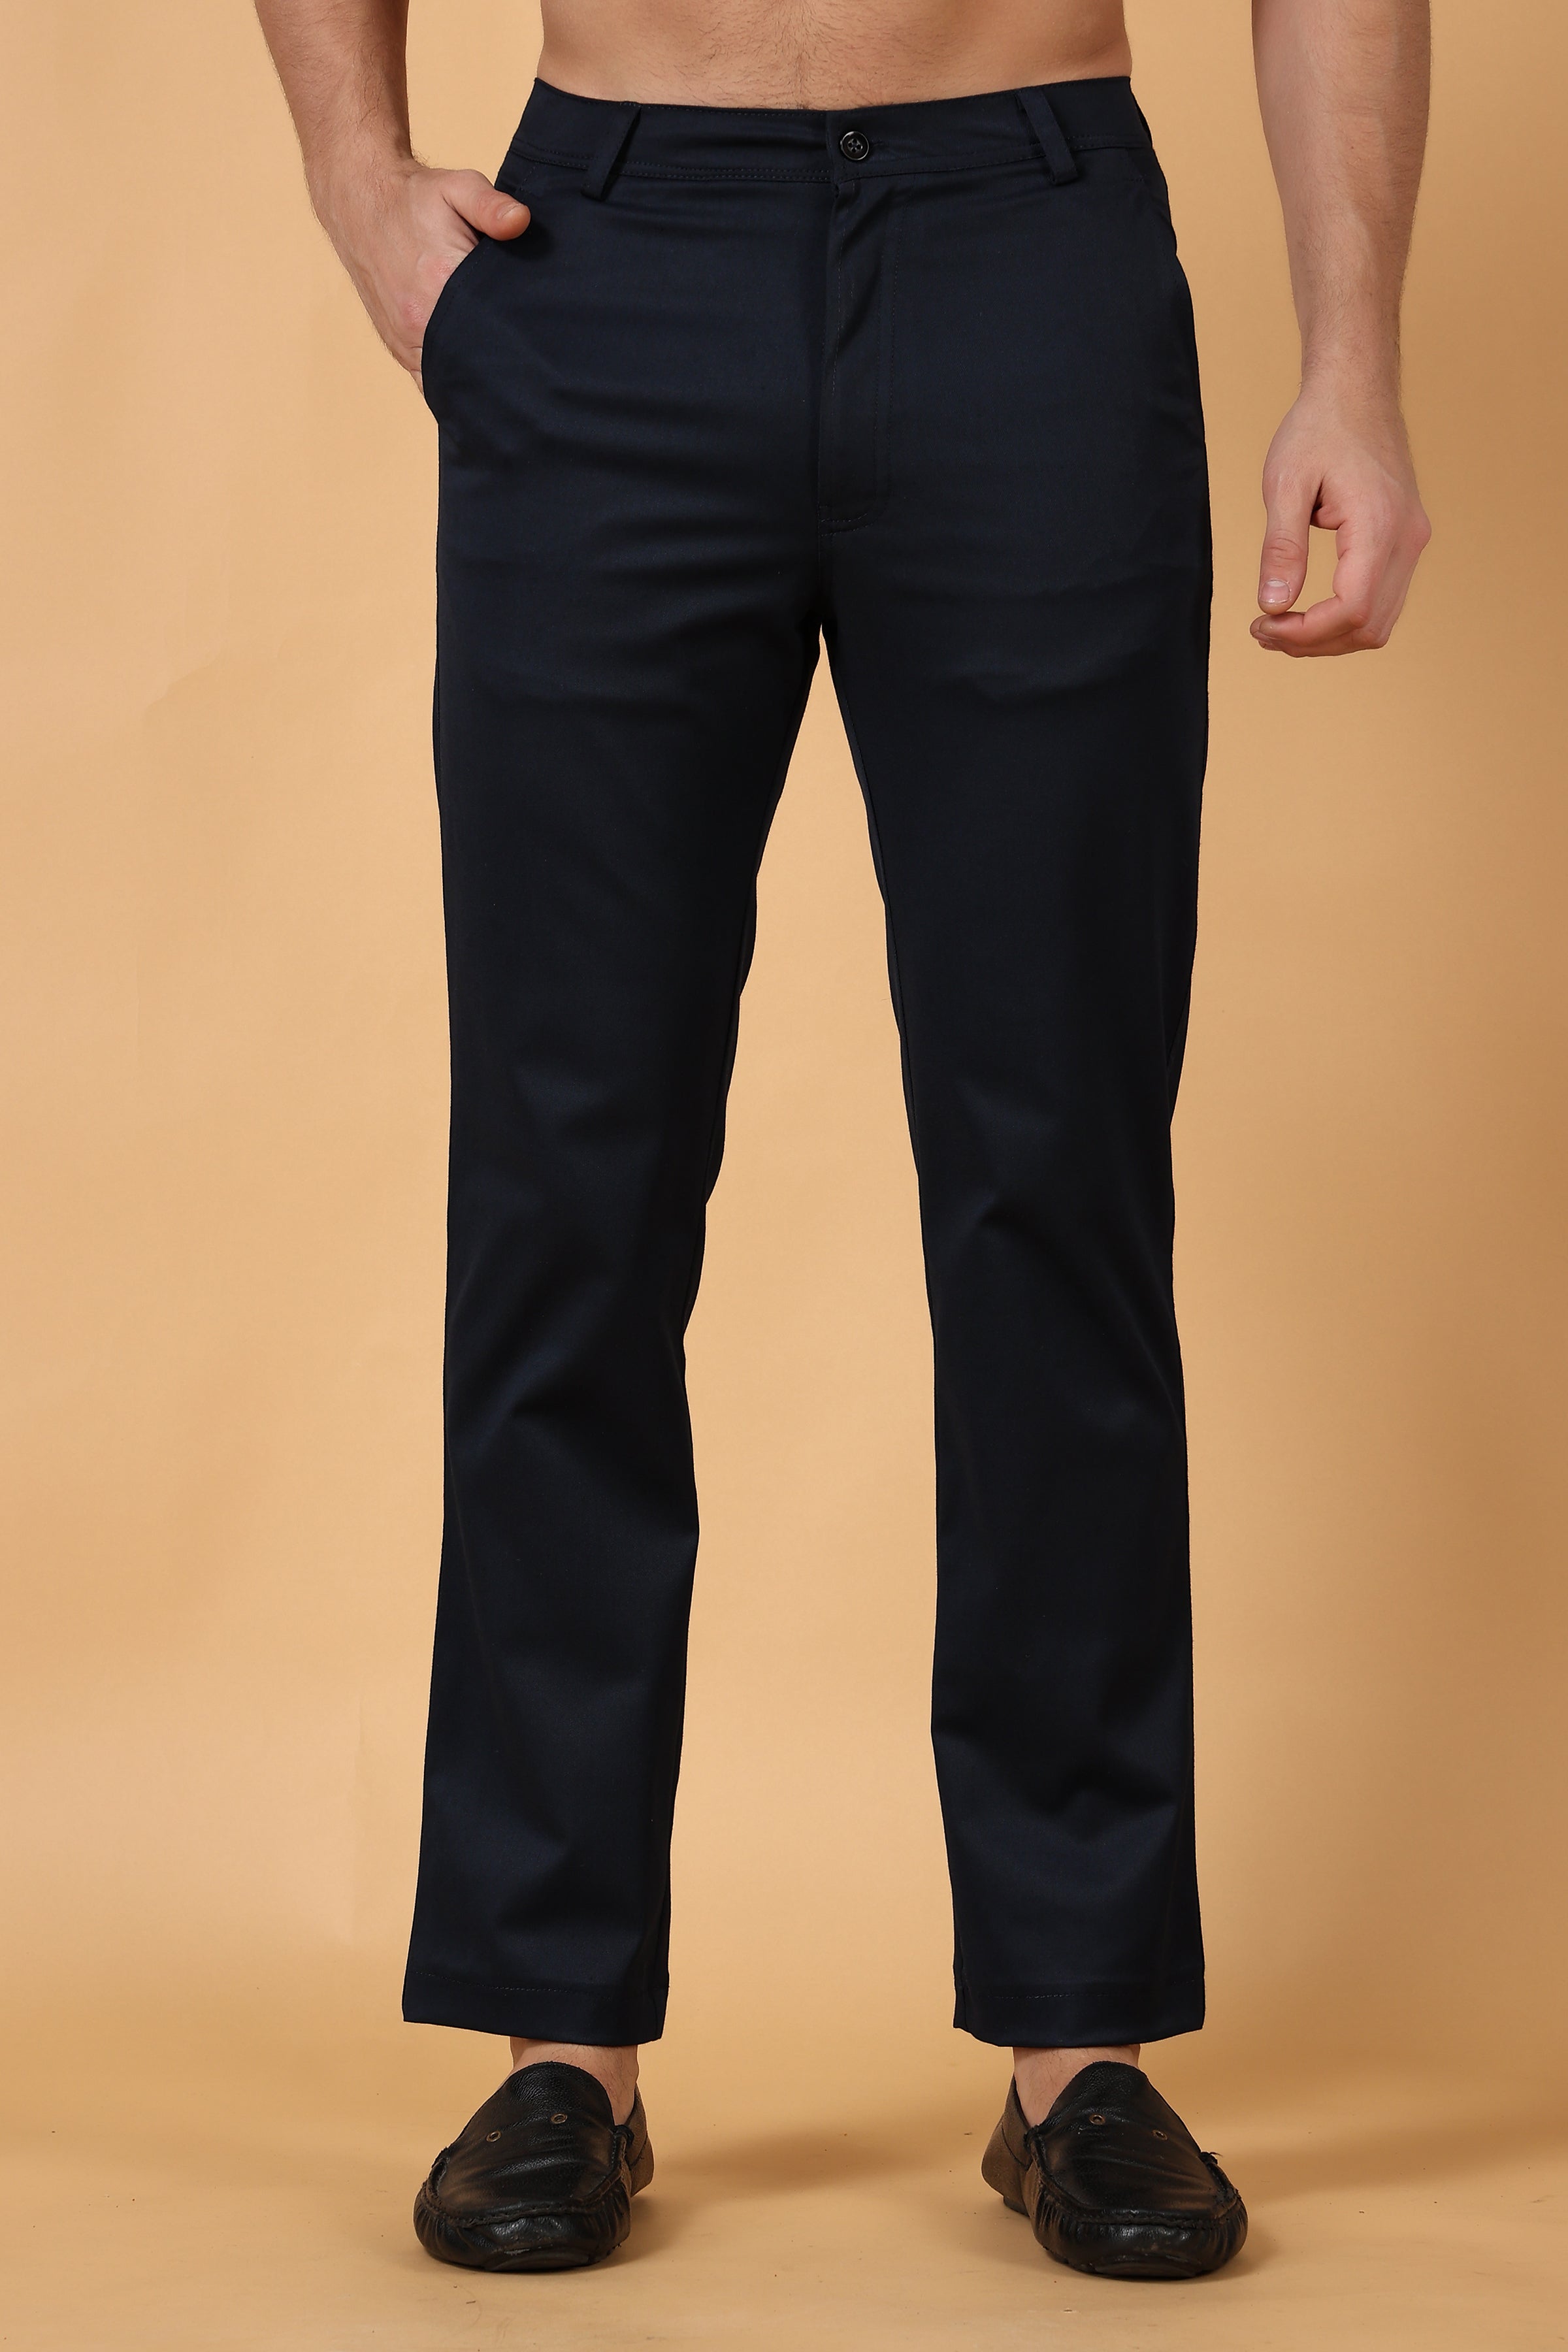 Buy Online Plus Size Men Black Trousers at best price  Plussin